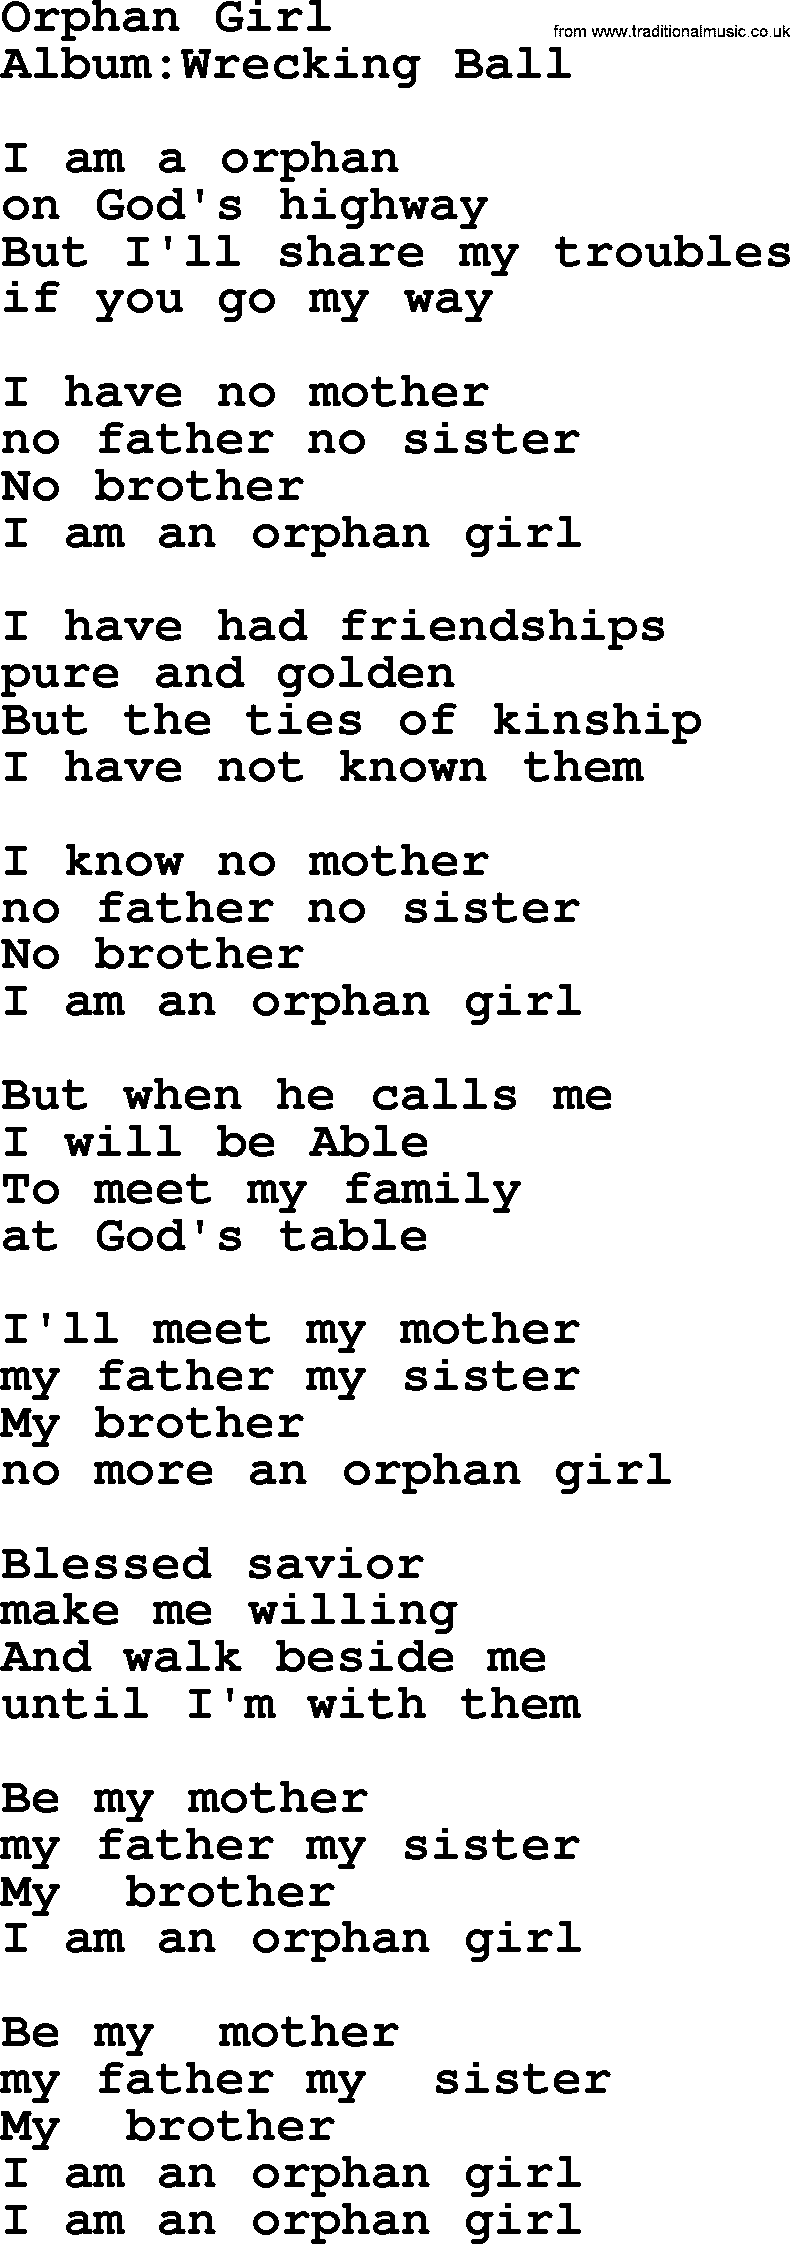 Emmylou Harris song: Orphan Girl lyrics